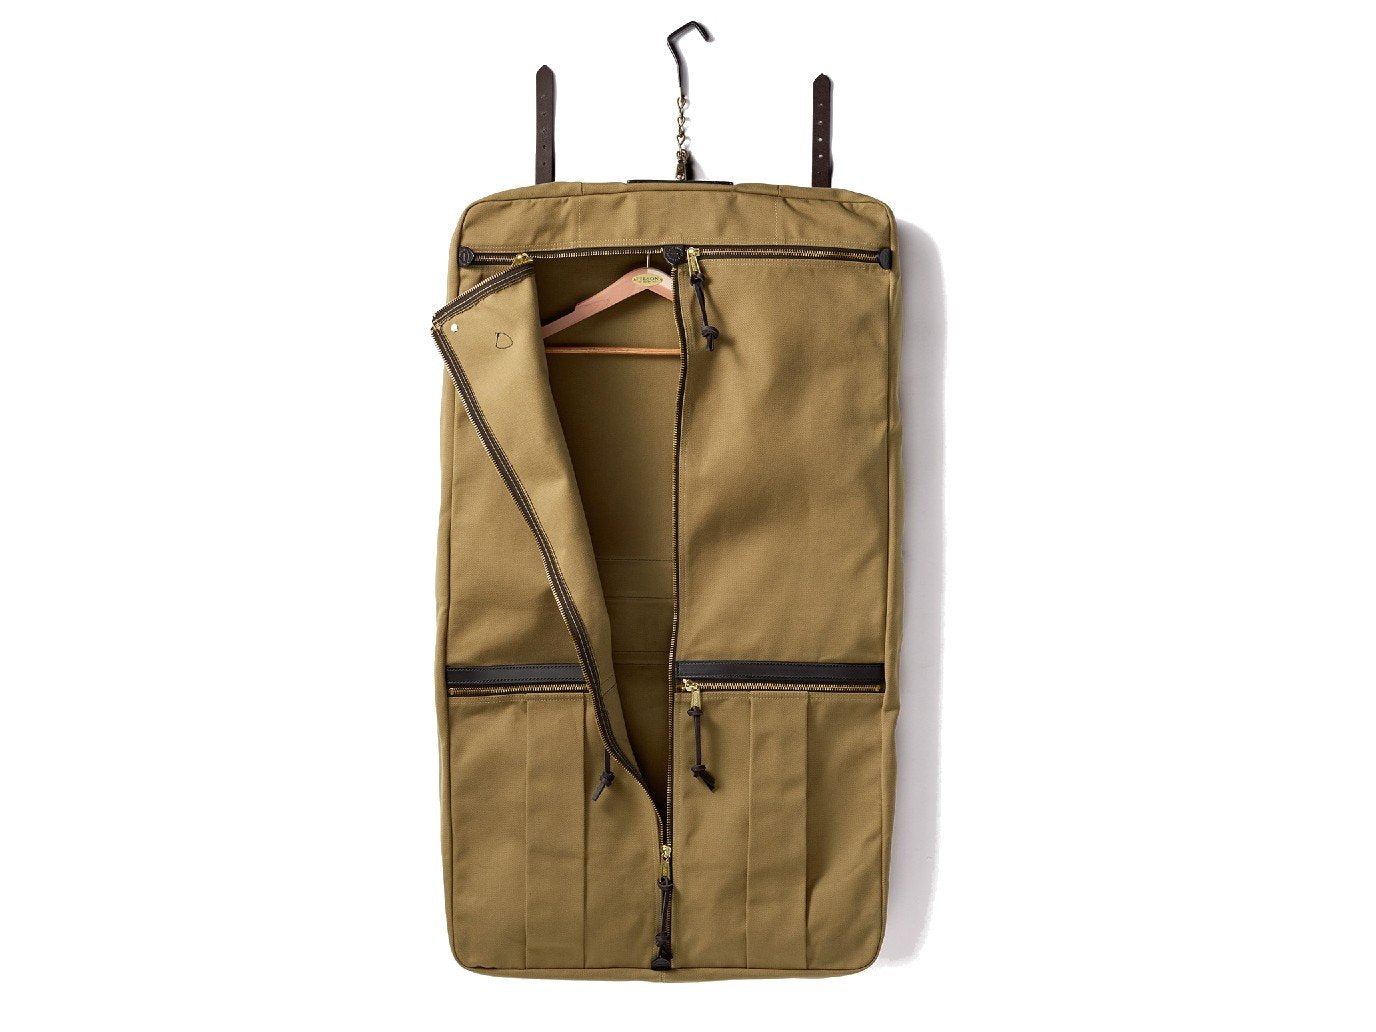 Unzipped Filson Garment Bag in tan